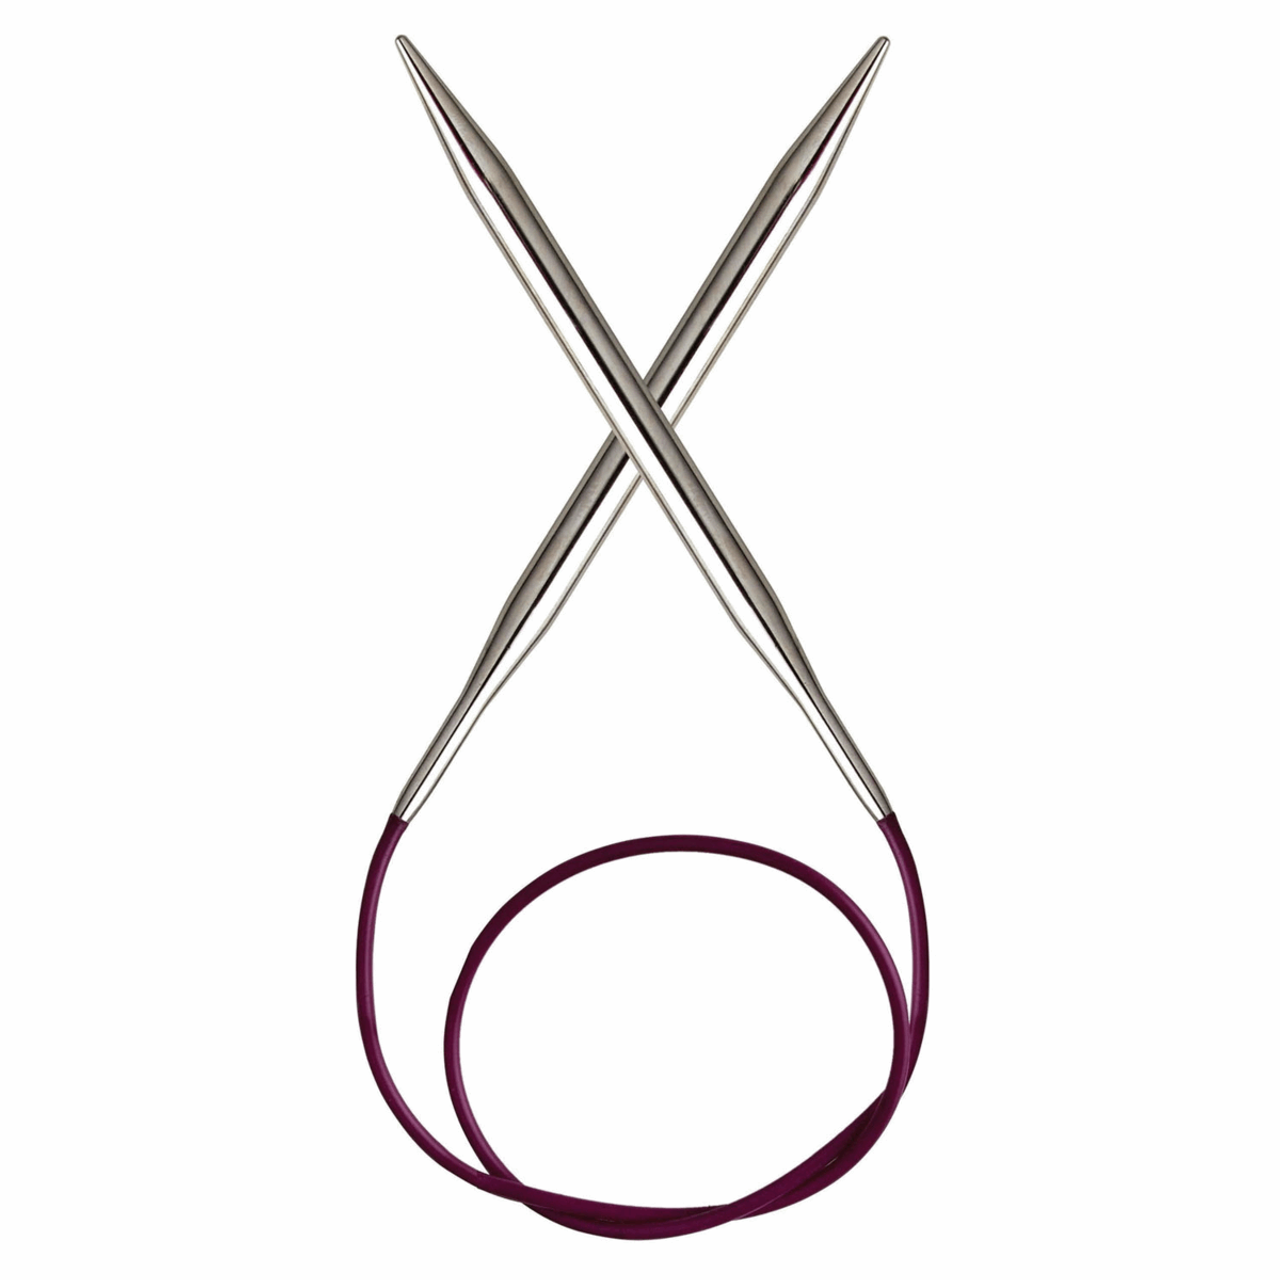 7mm Nova Circular Knitting Needle, 100cm length